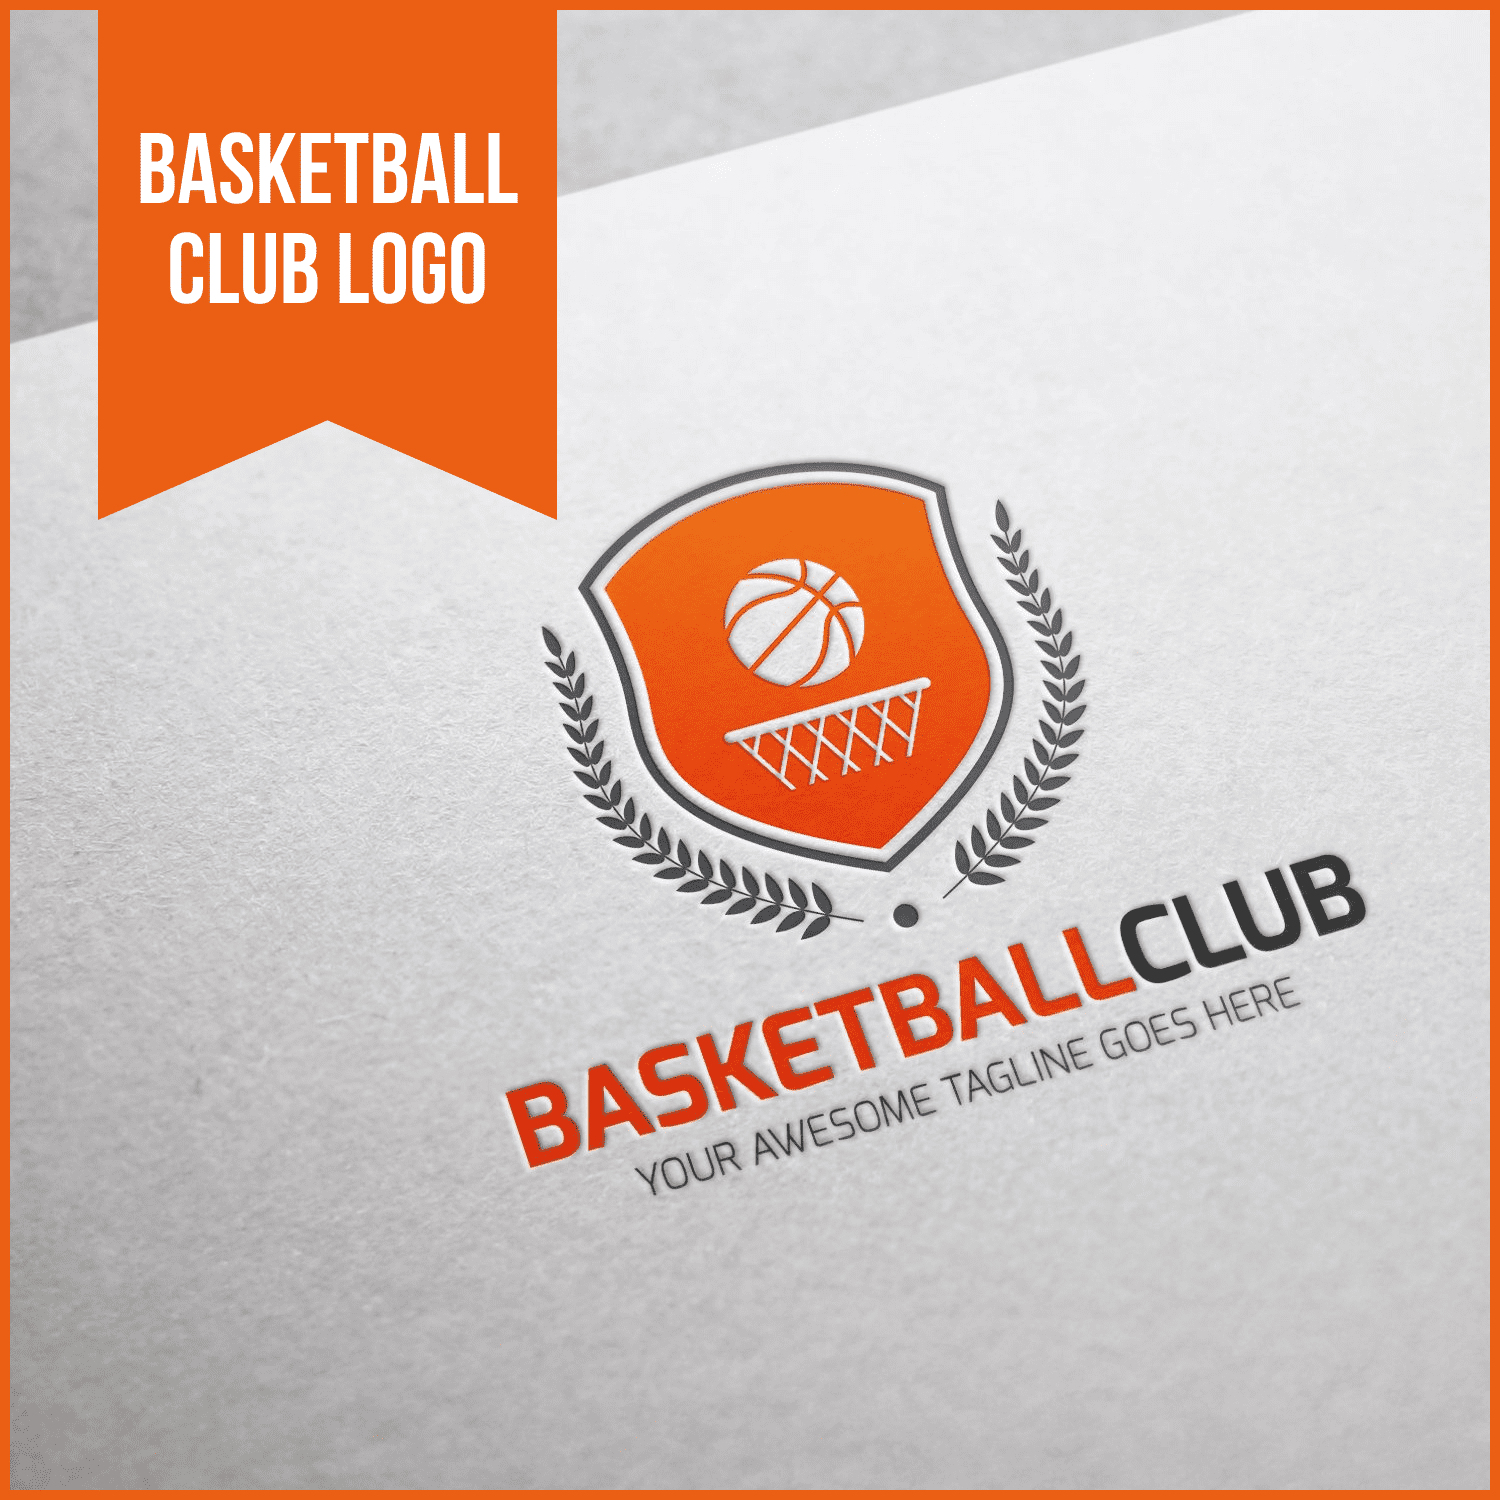 Basketball Club Logo cover.